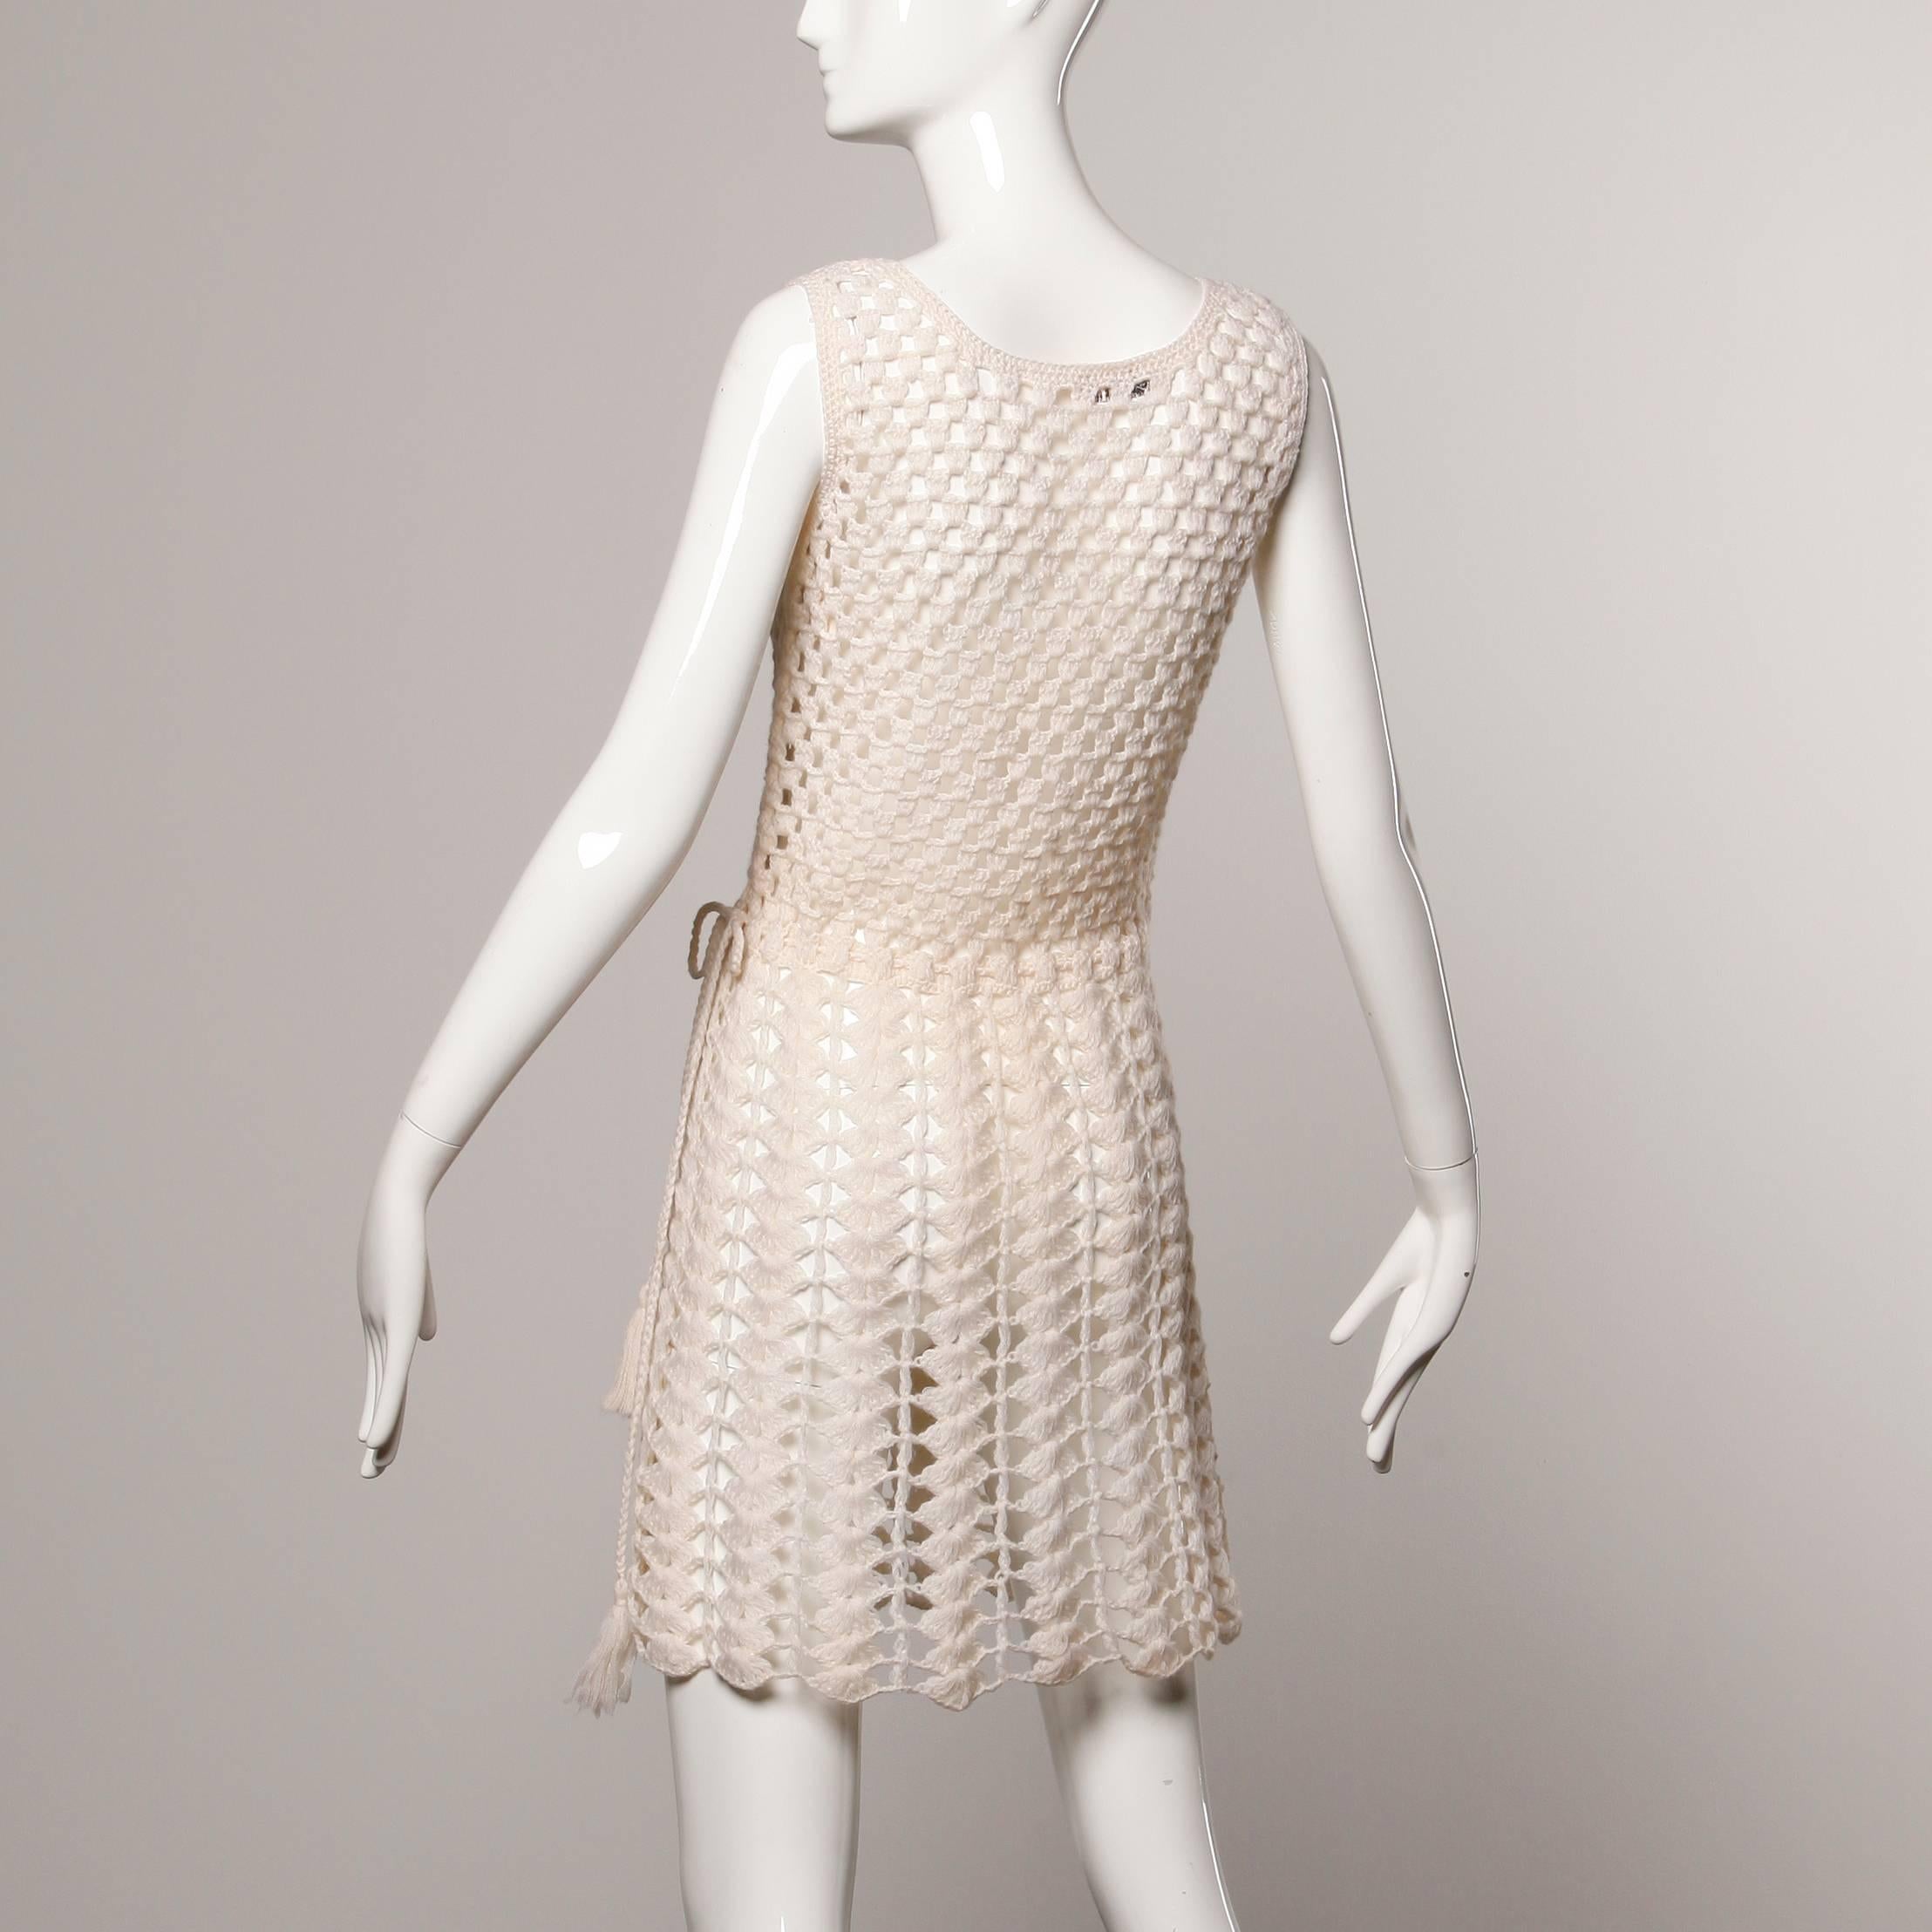 Beige Unworn 1960s Vintage Hand Crochet Wool Dress with Original Tags Attached